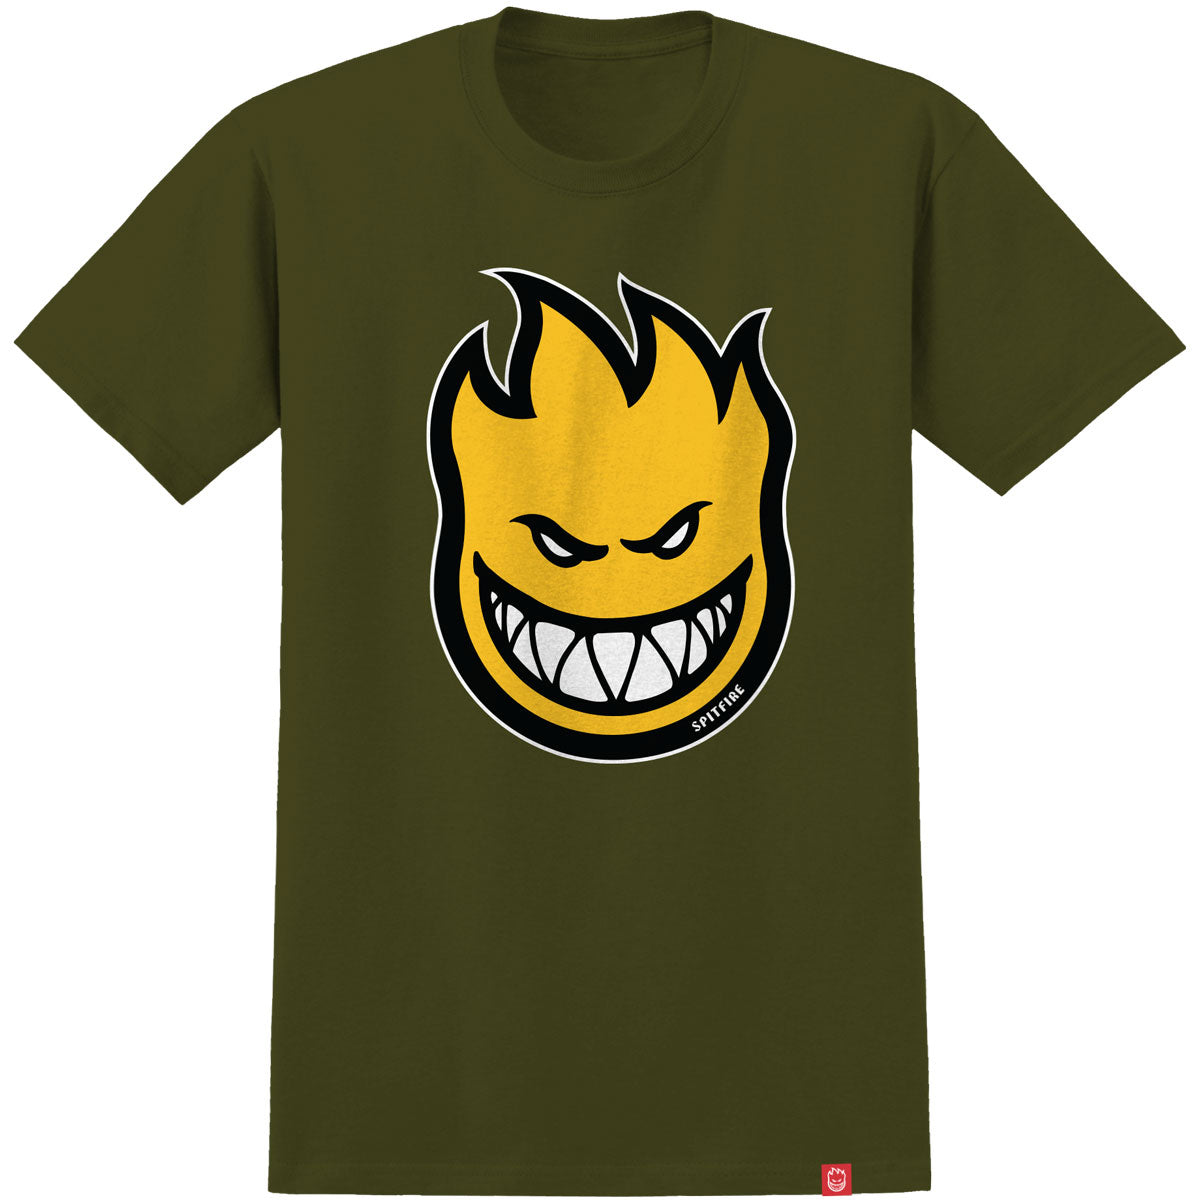 Spitfire Bighead Fill T-Shirt - Military Green/Gold/Black image 1